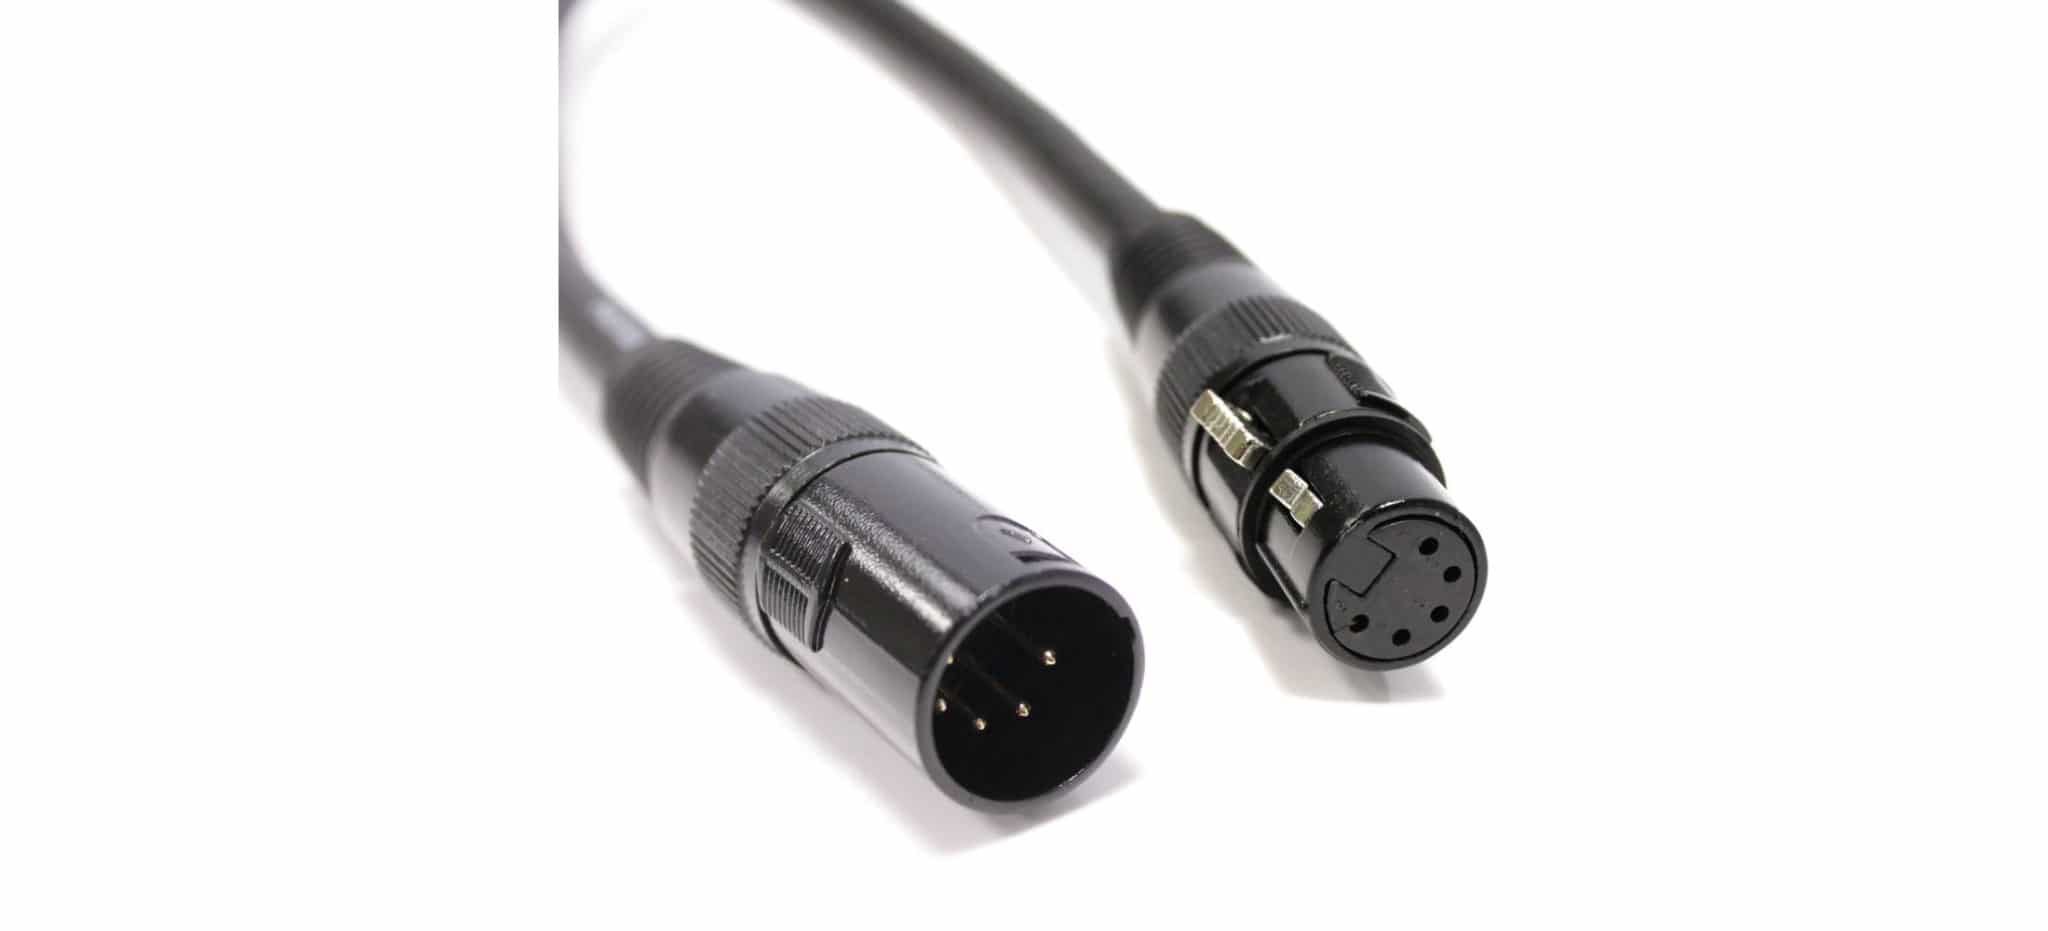 DMX512 Cable, 5 pins XLR, 1m - Soliled